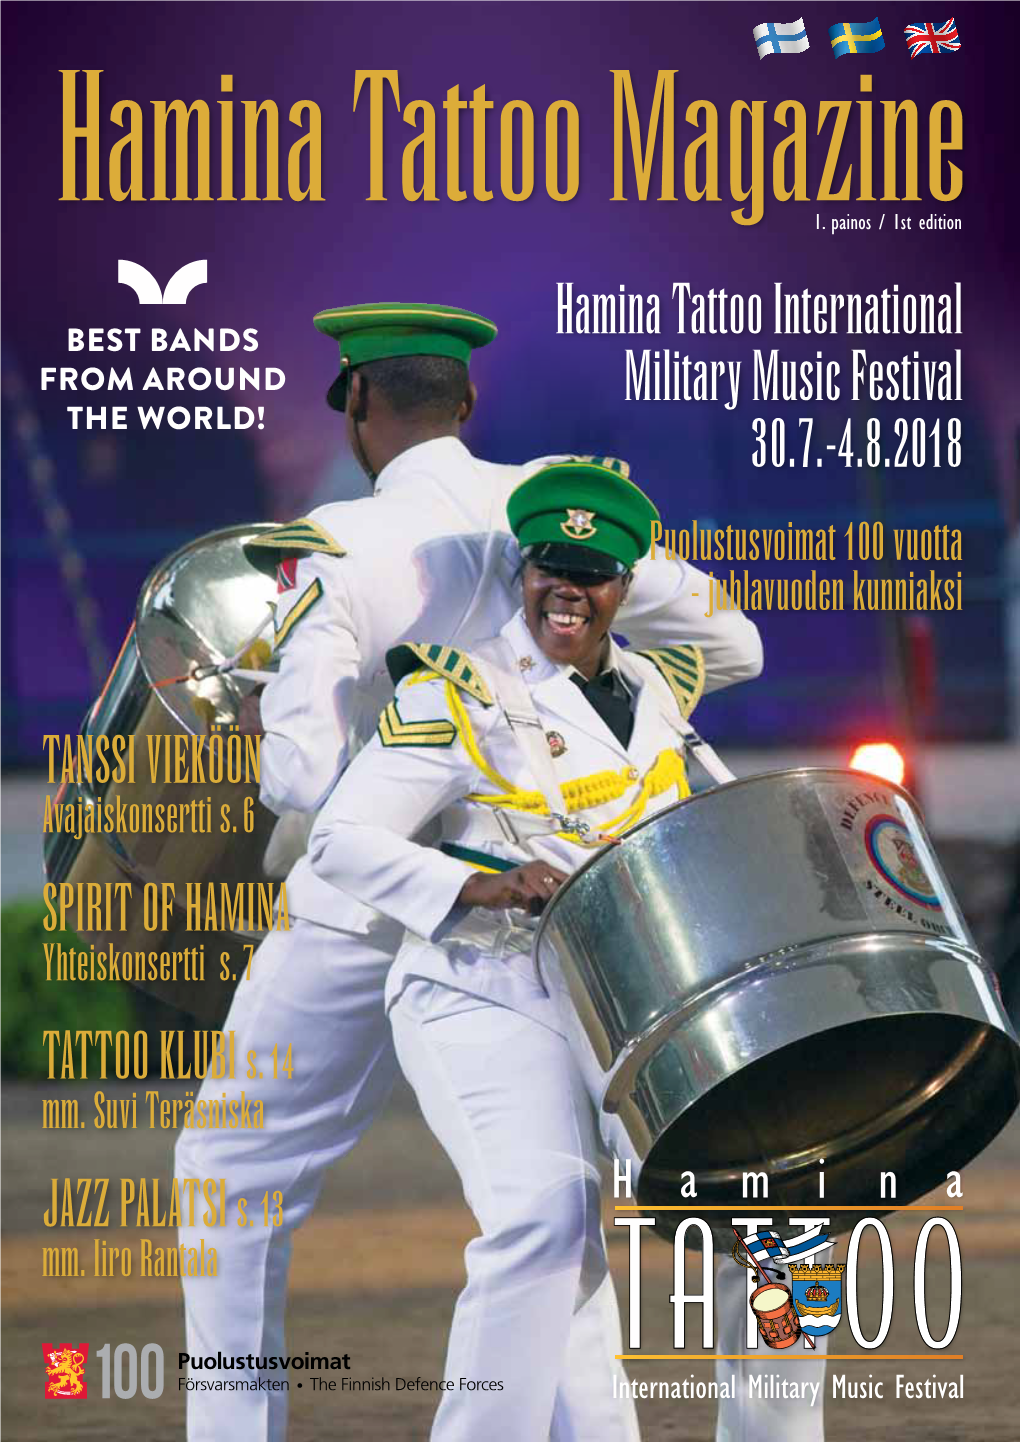 Hamina Tattoo International Military Music Festival 30.7.-4.8.2018